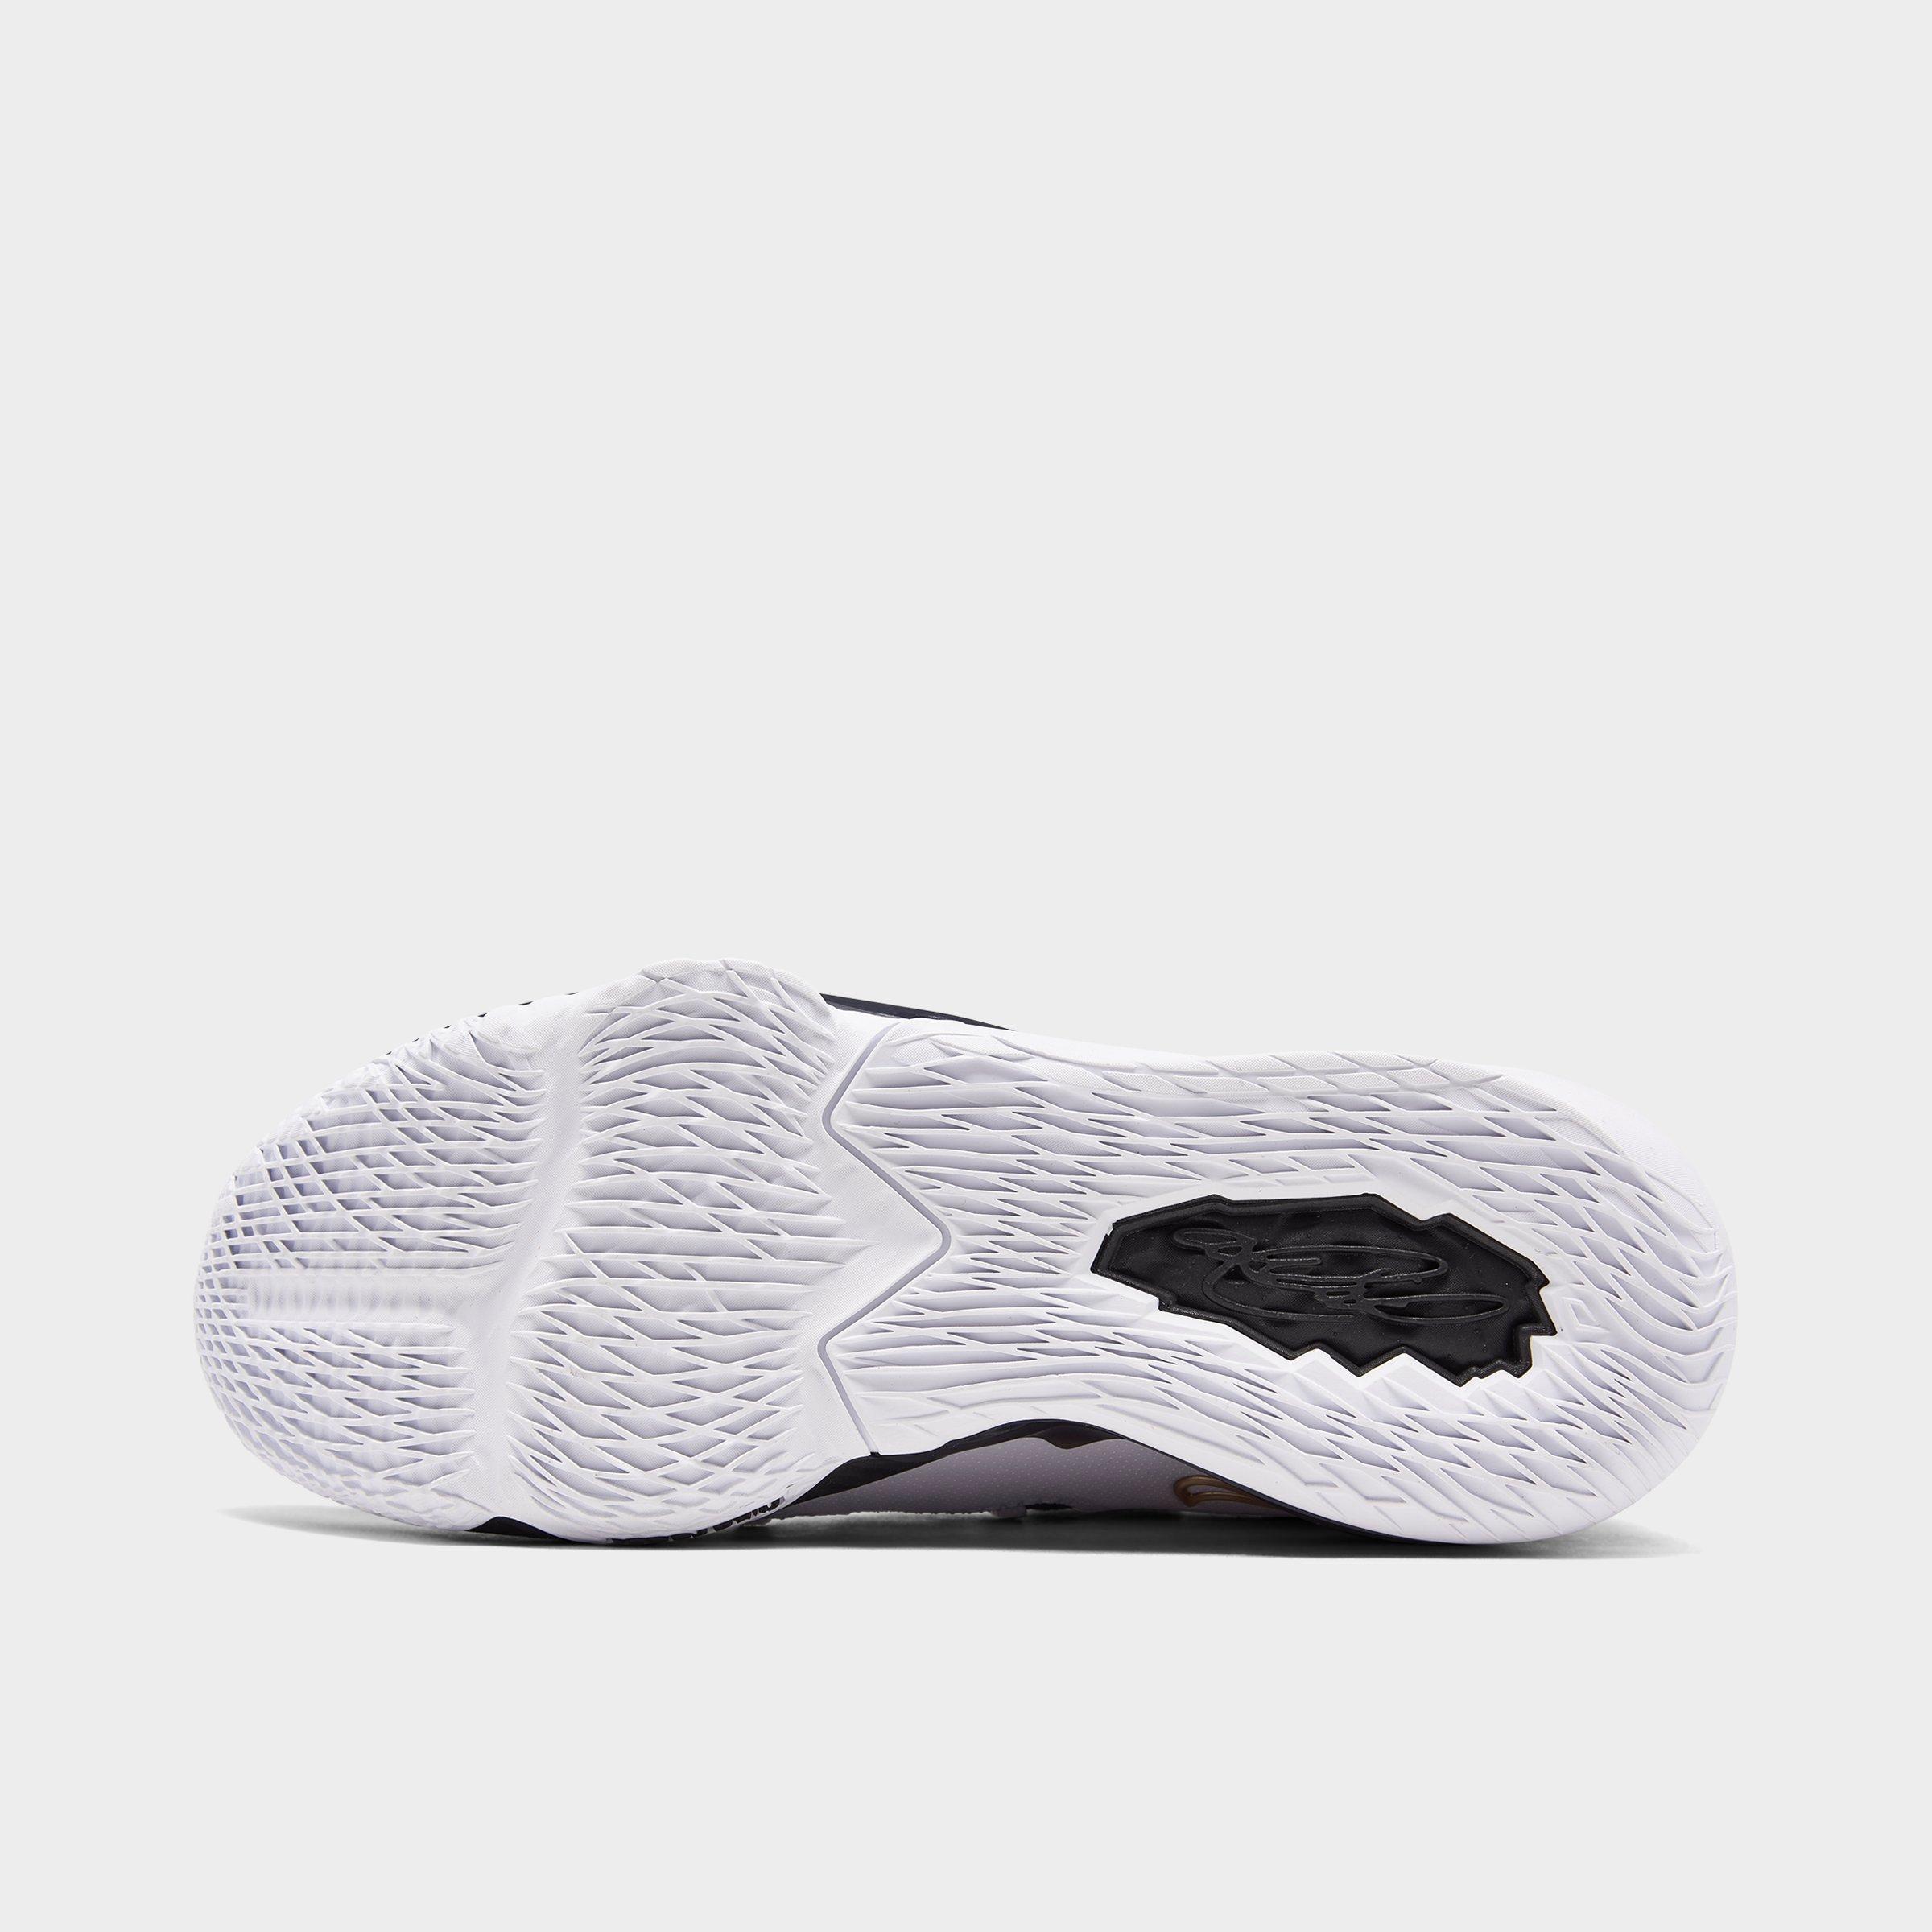 Nike LeBron 17 Low Basketball Shoes| JD 